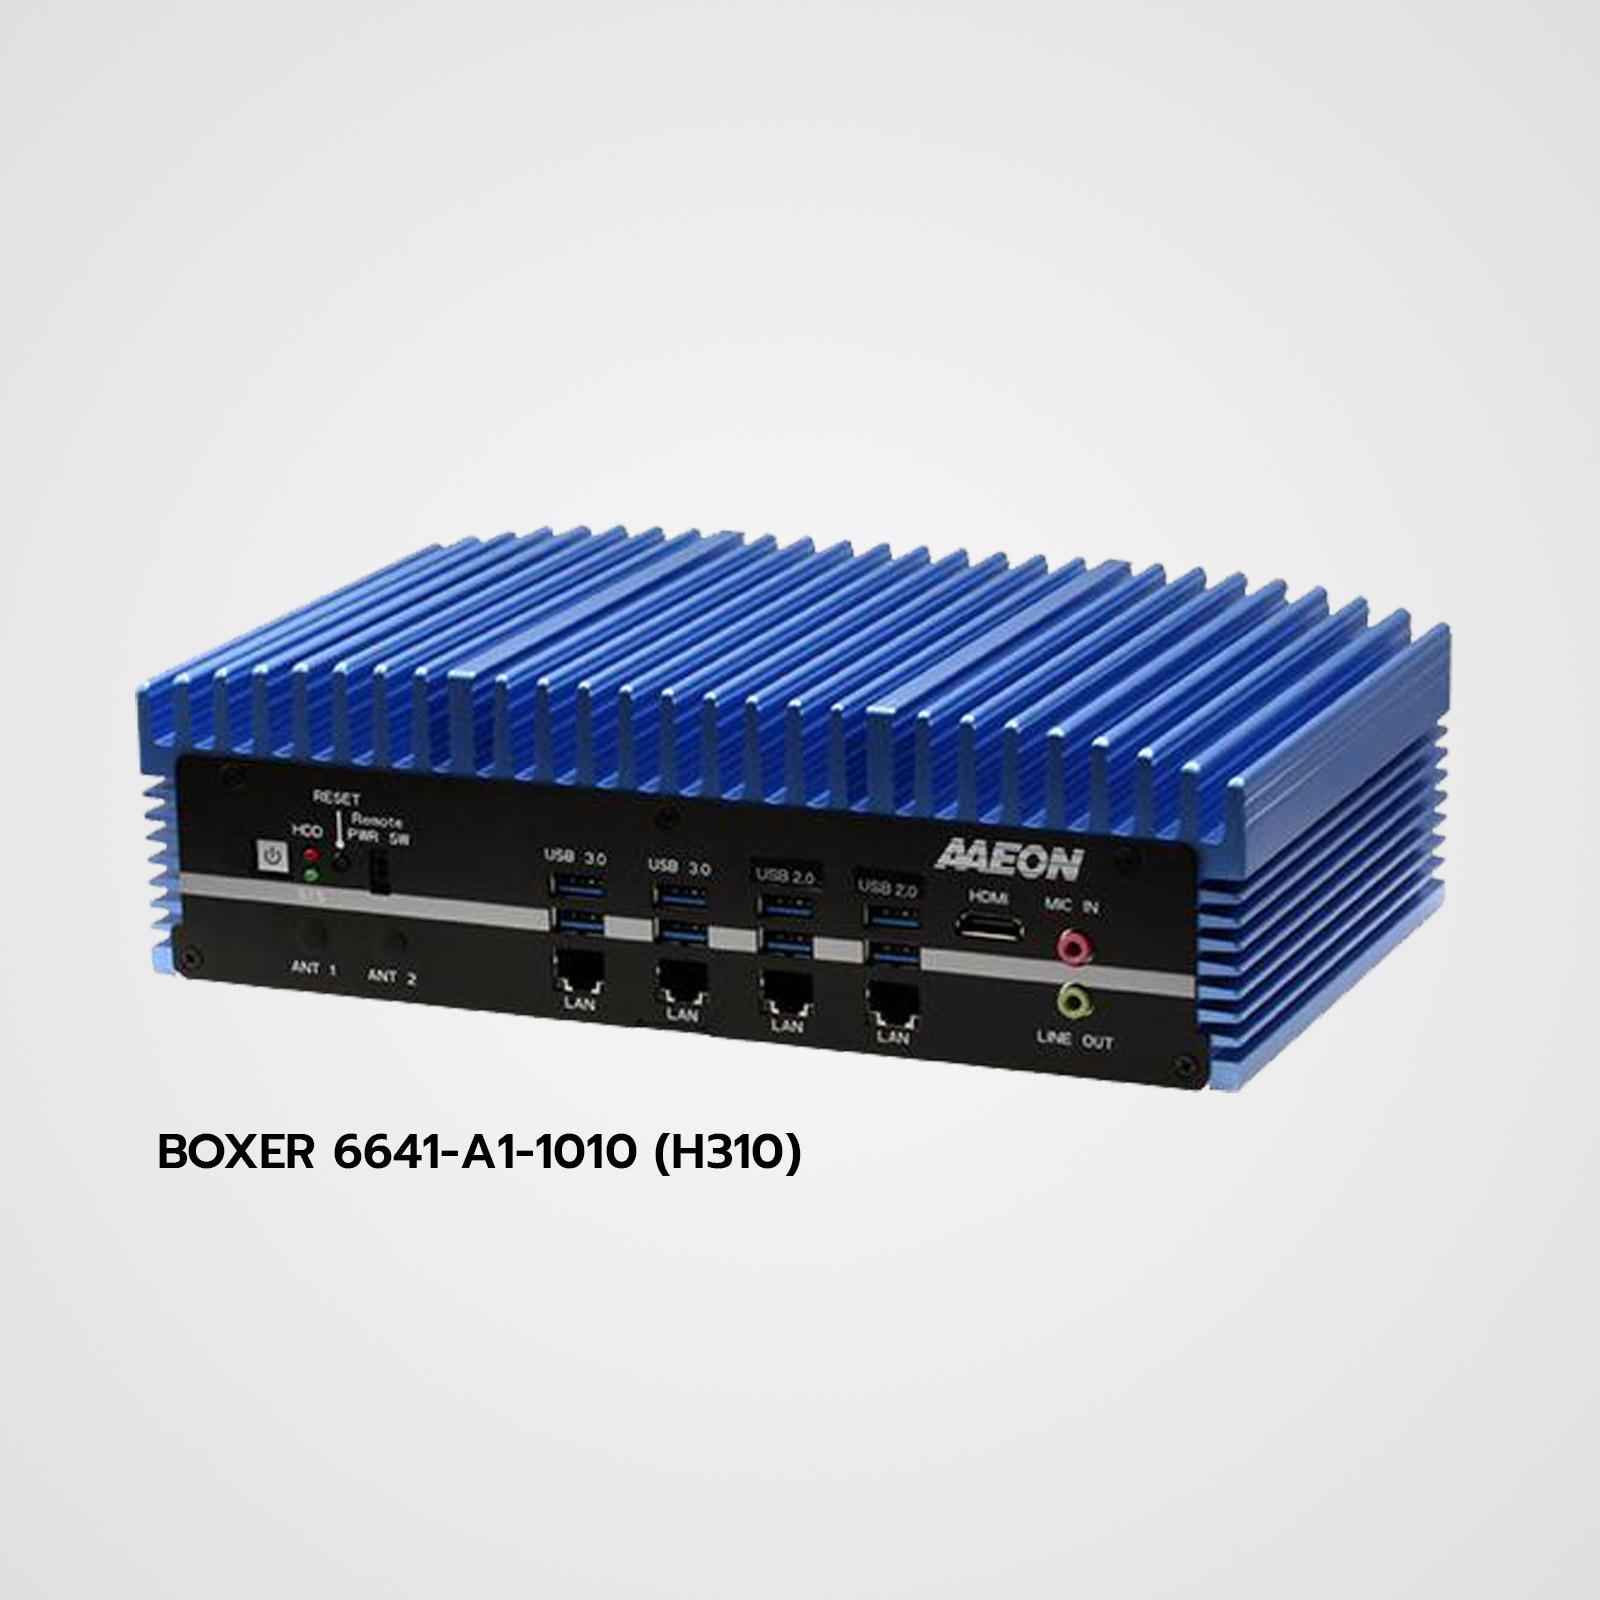 BOXER-6641 (Entry-level Box PC) 